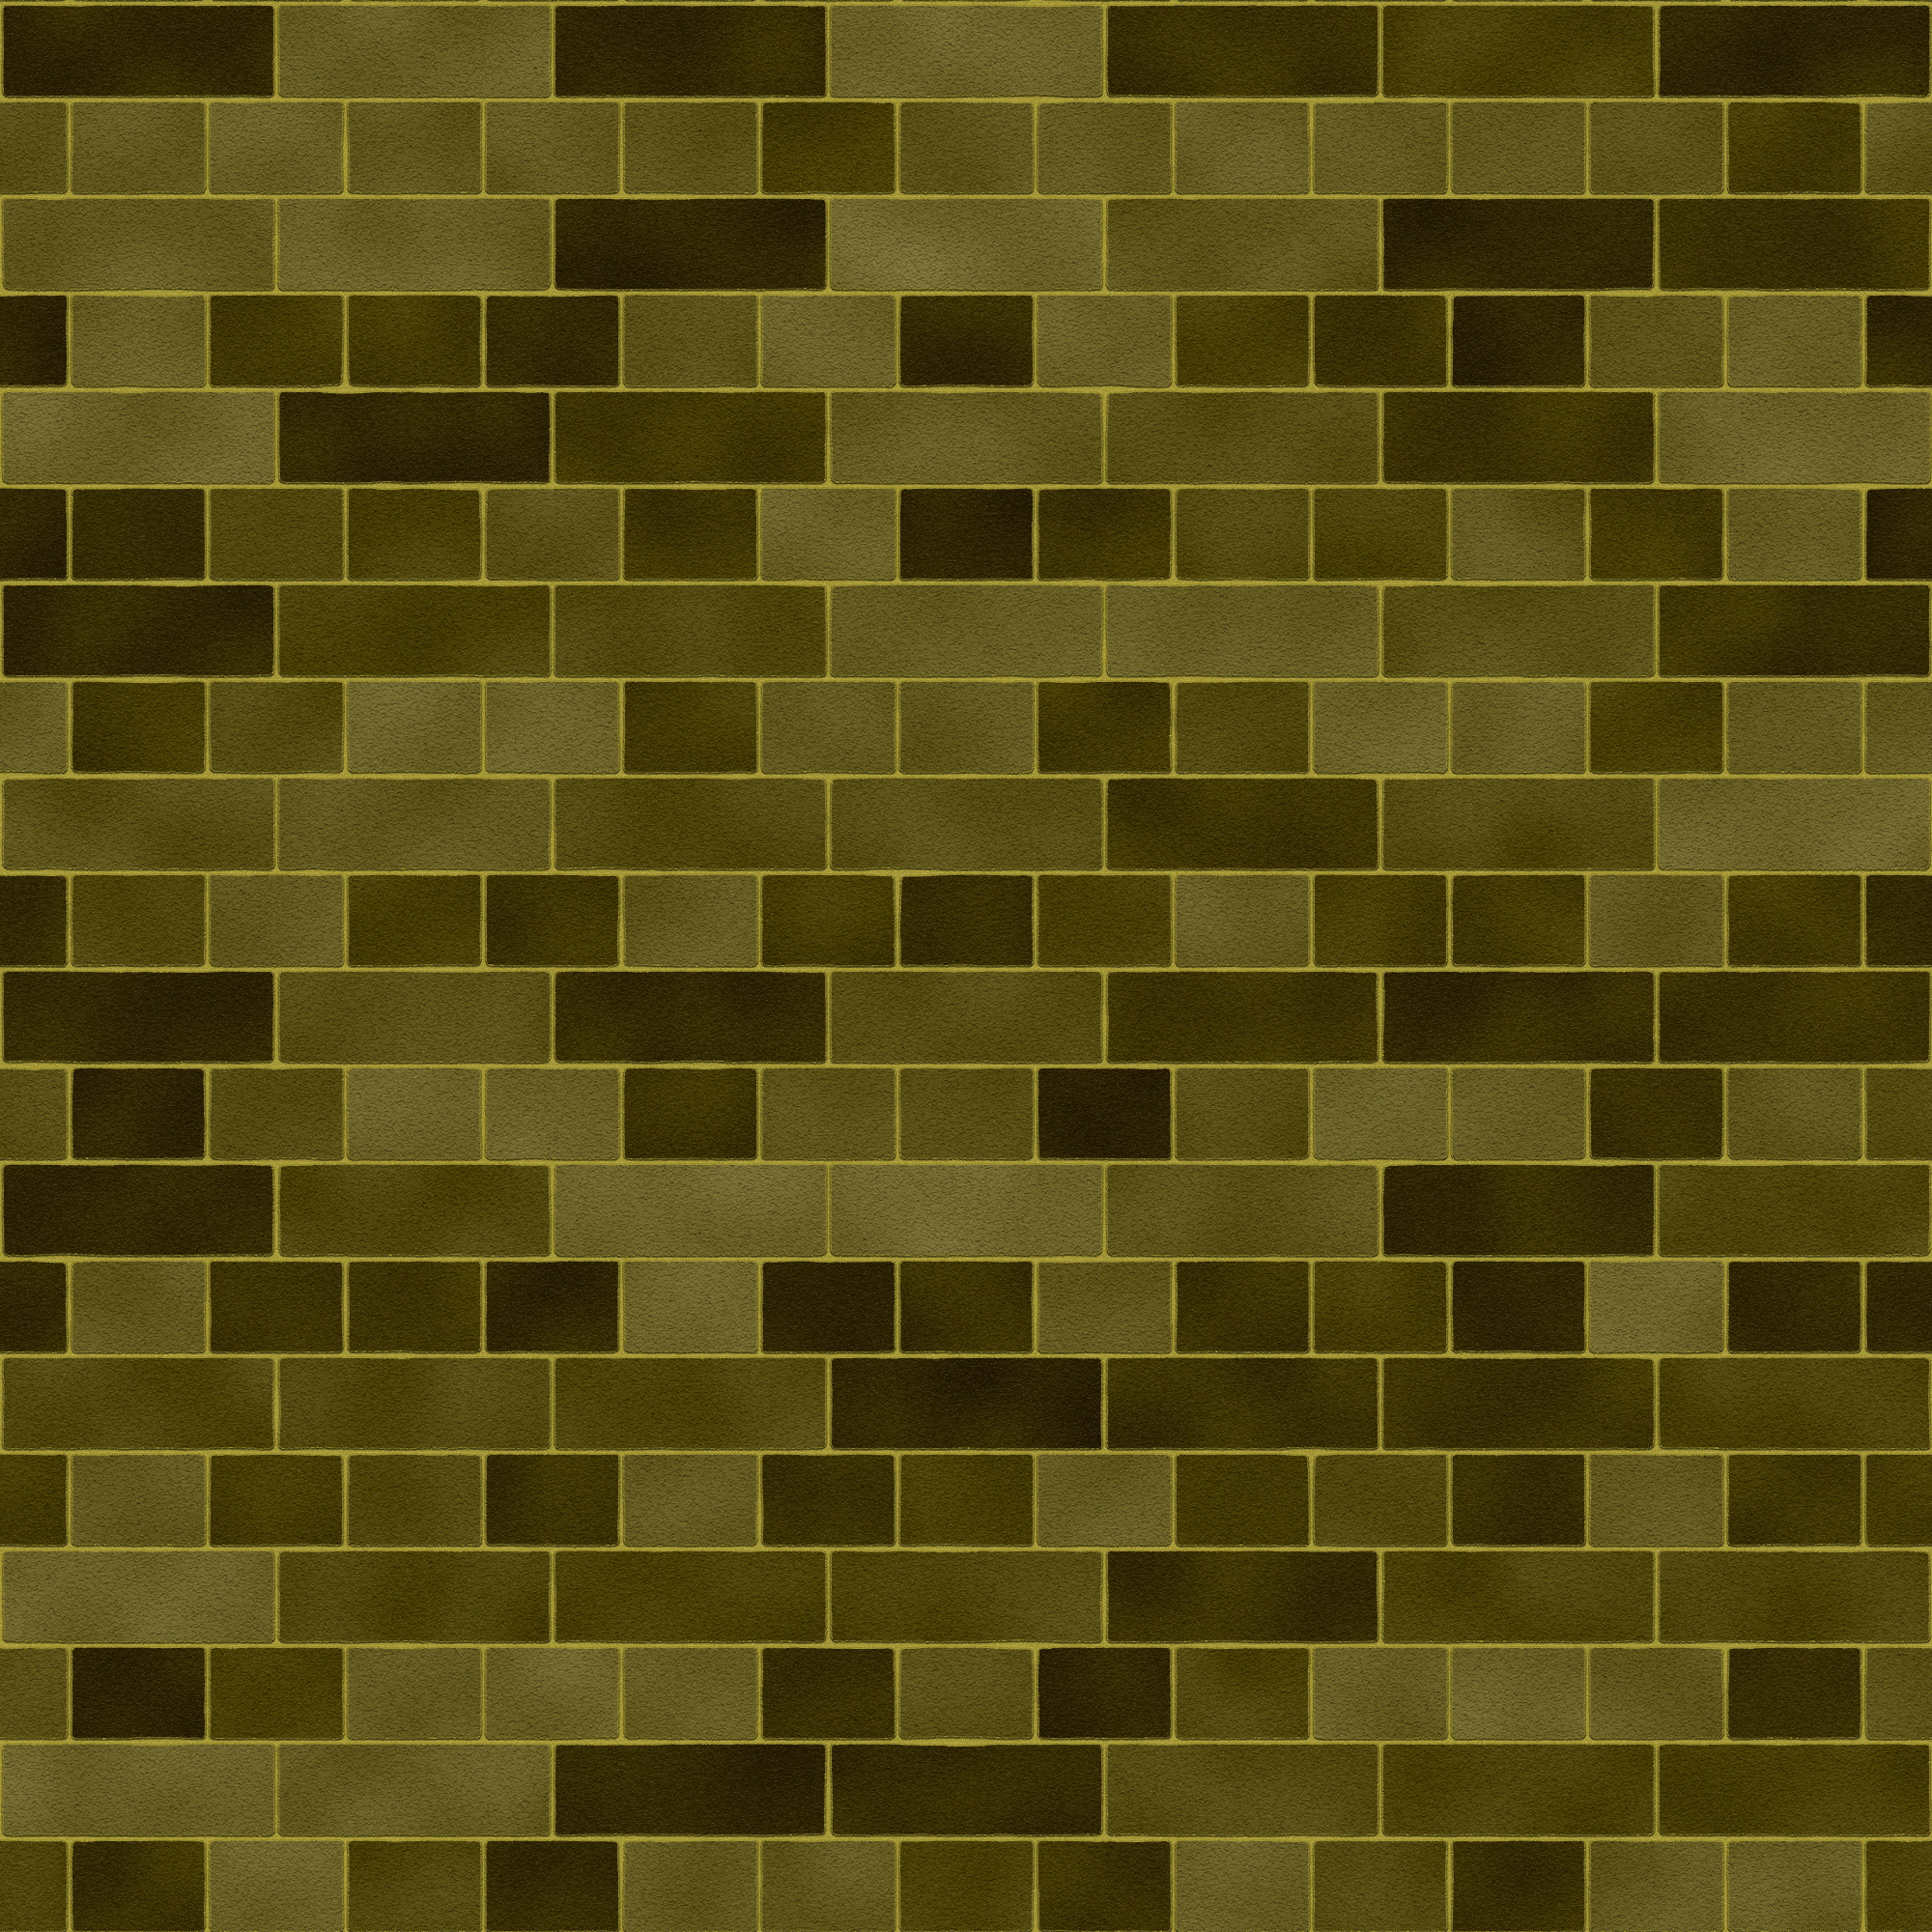 green brick wall texture, green brick wall, download photo, background, texture